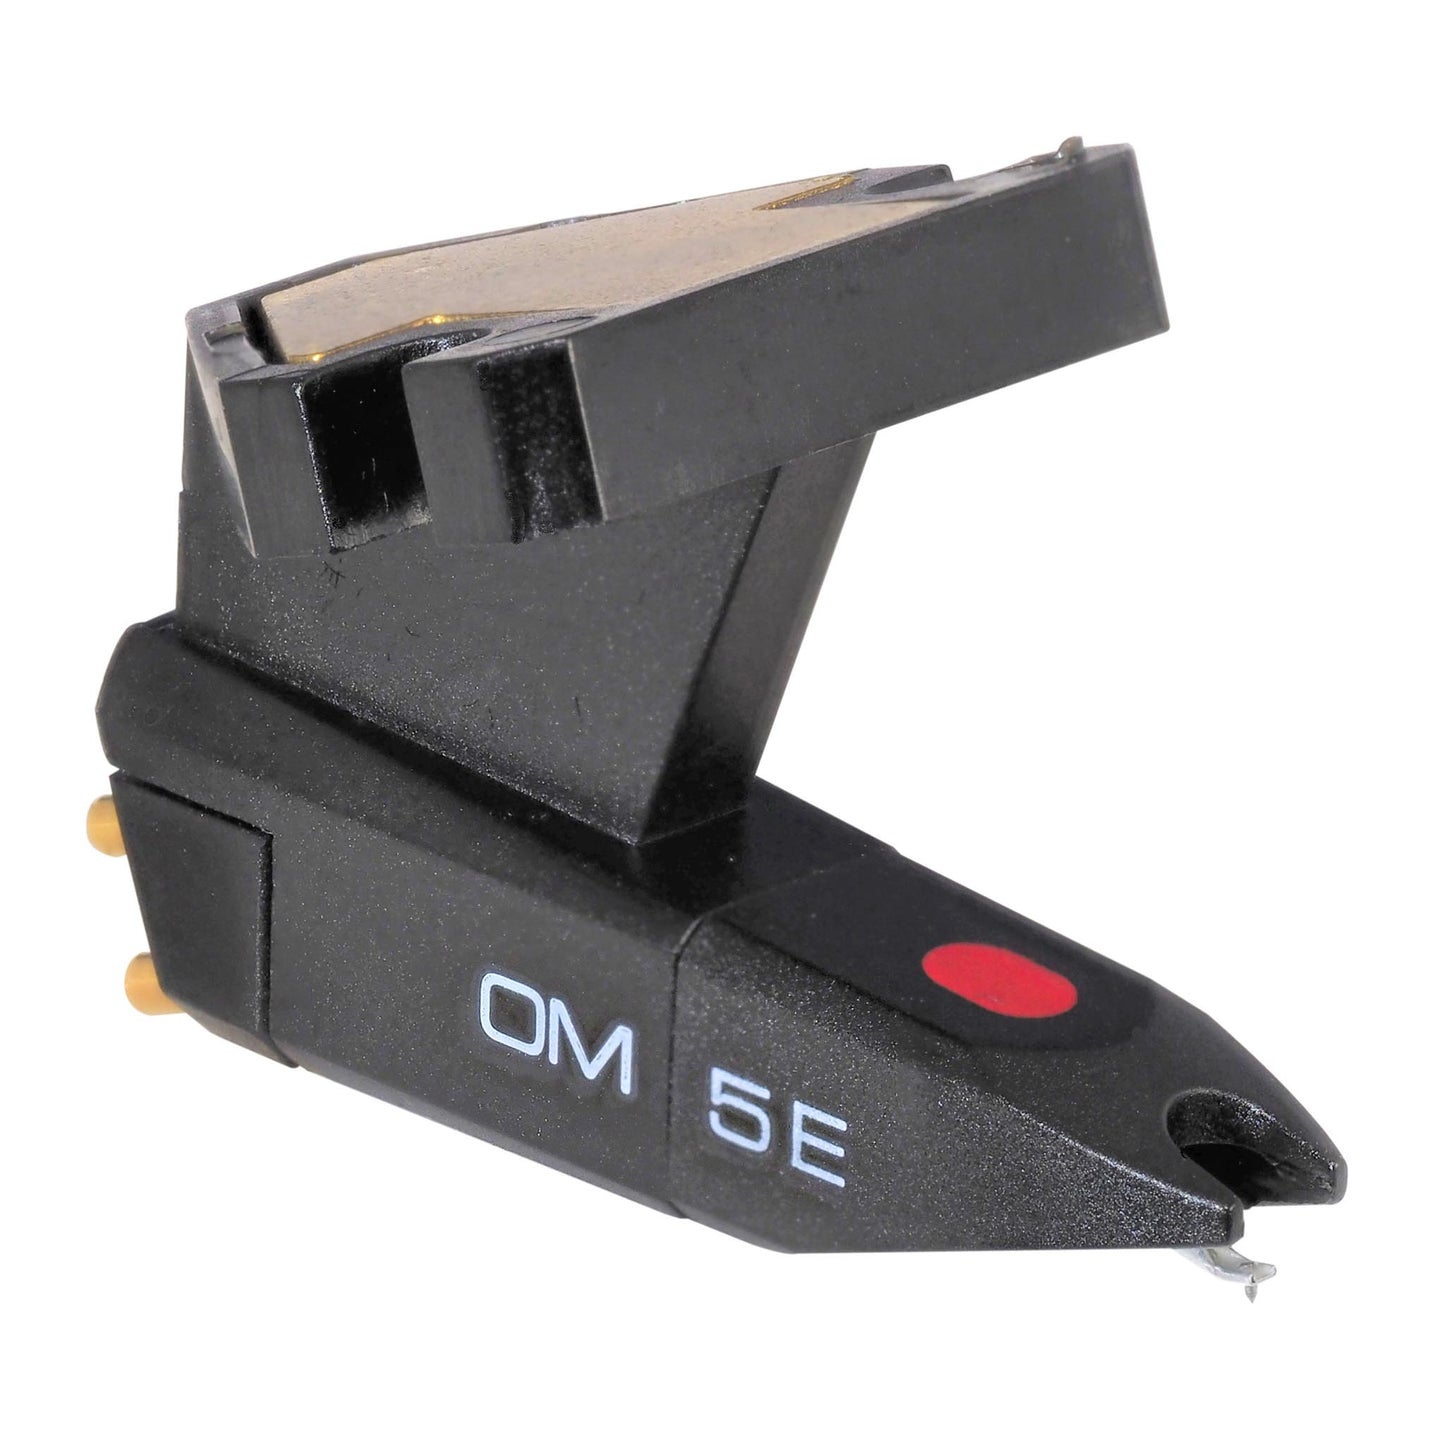 Ortofon OM 5E Moving Magnet Cartridge